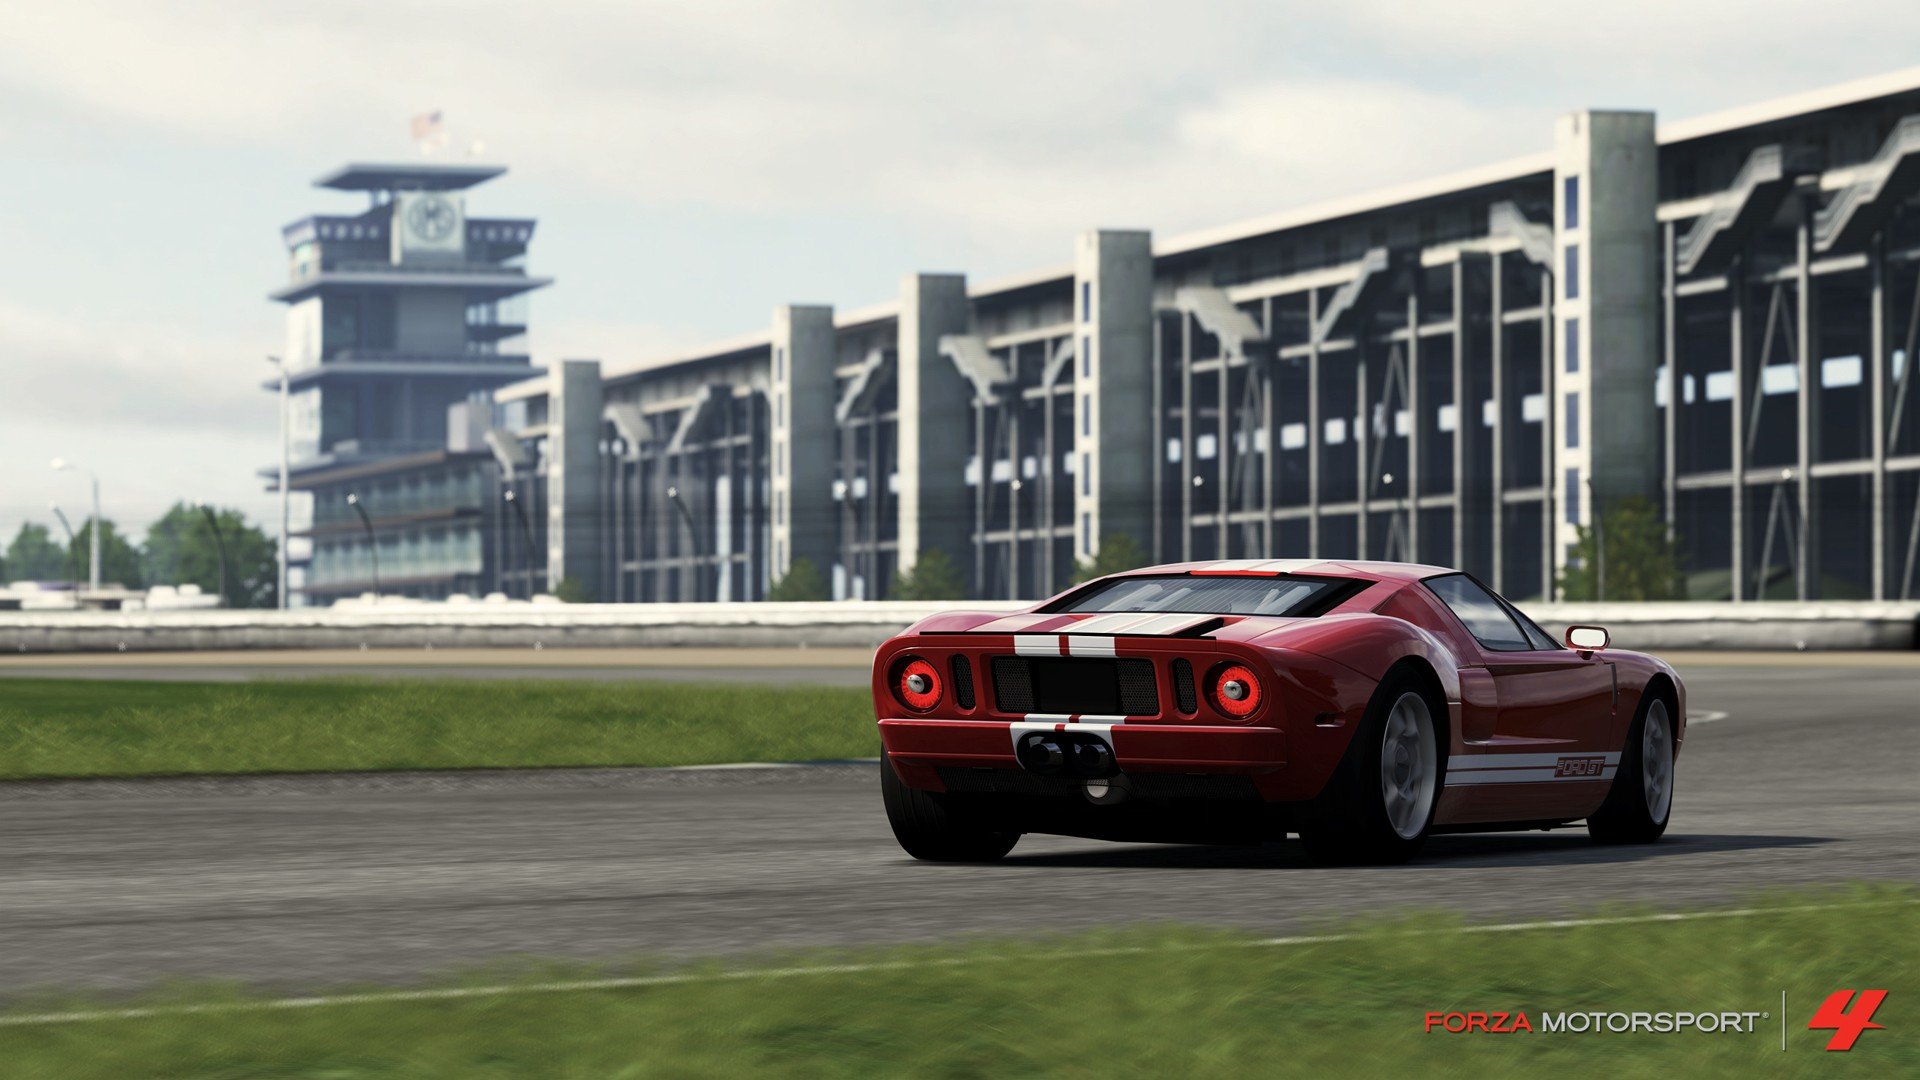 Download full hd Forza Motorsport desktop background ID:463454 for free